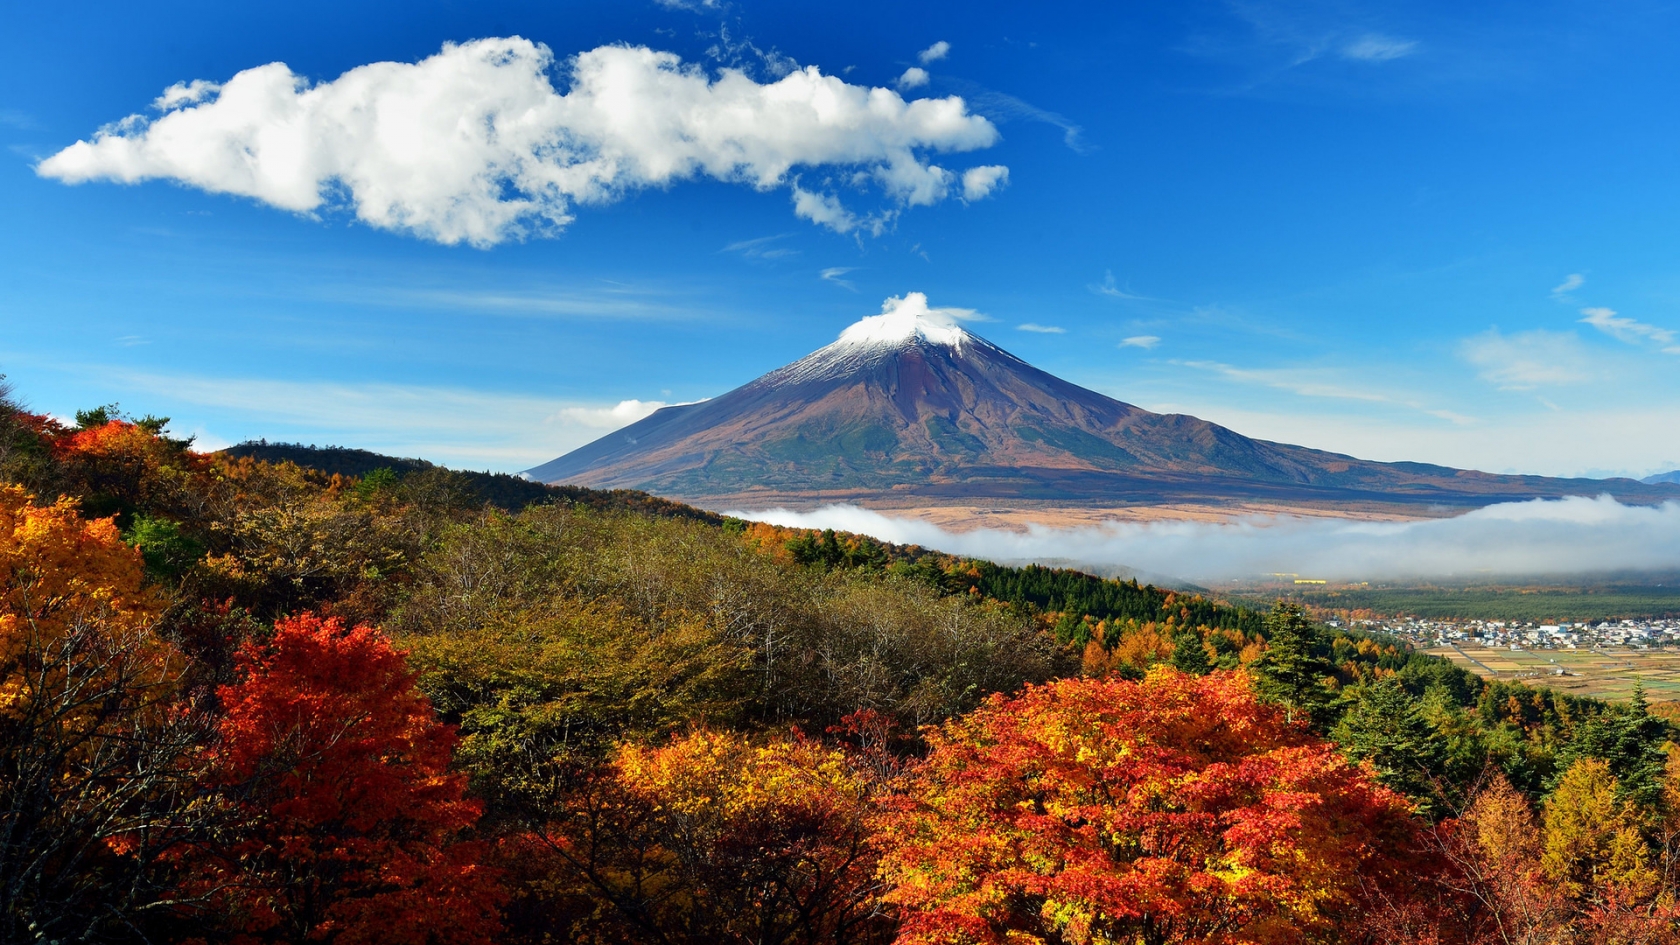 Mount Fuji Japan for 1680 x 945 HDTV resolution